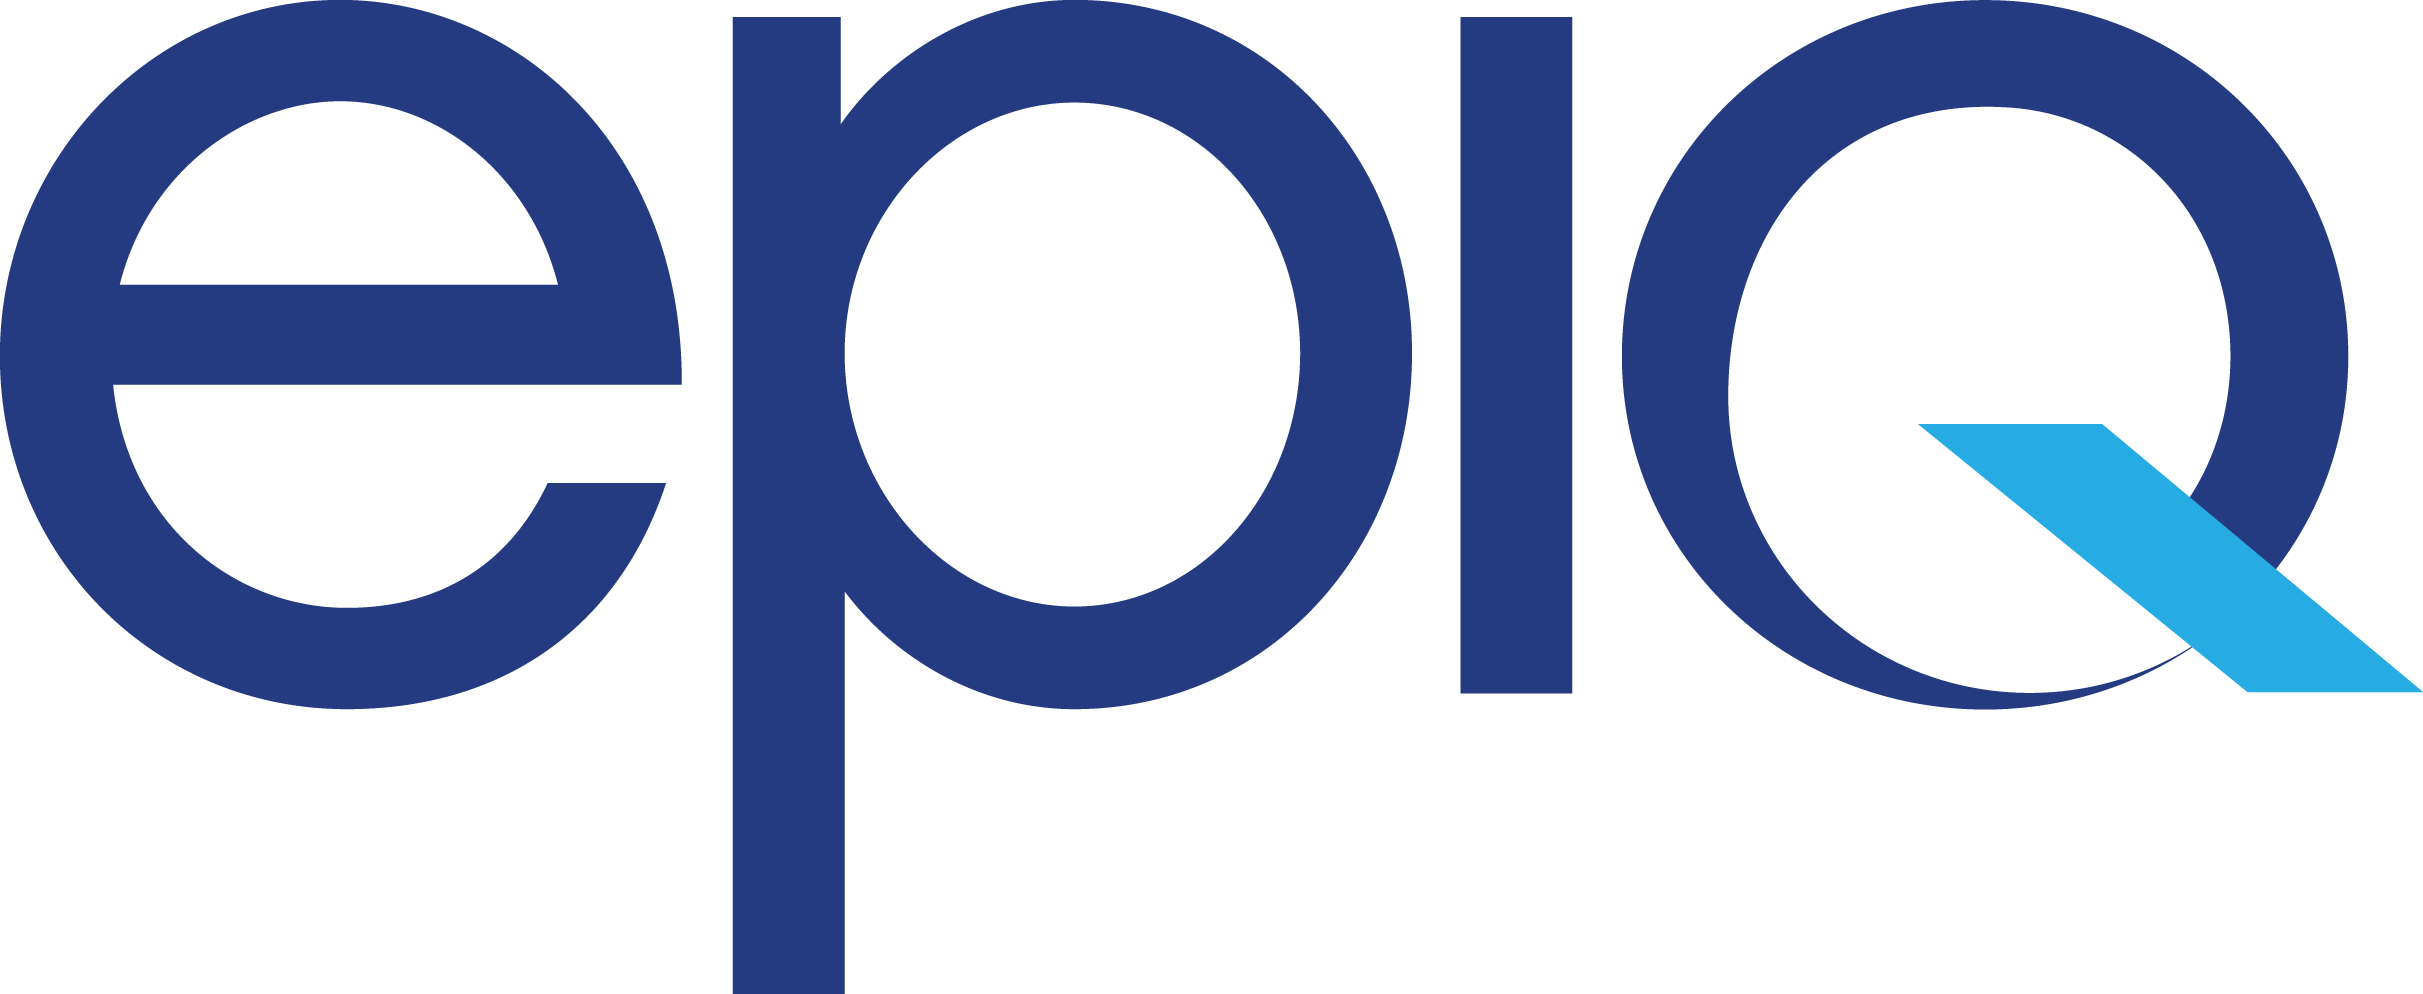 1470 Epiq Hong Kong, Limited logo